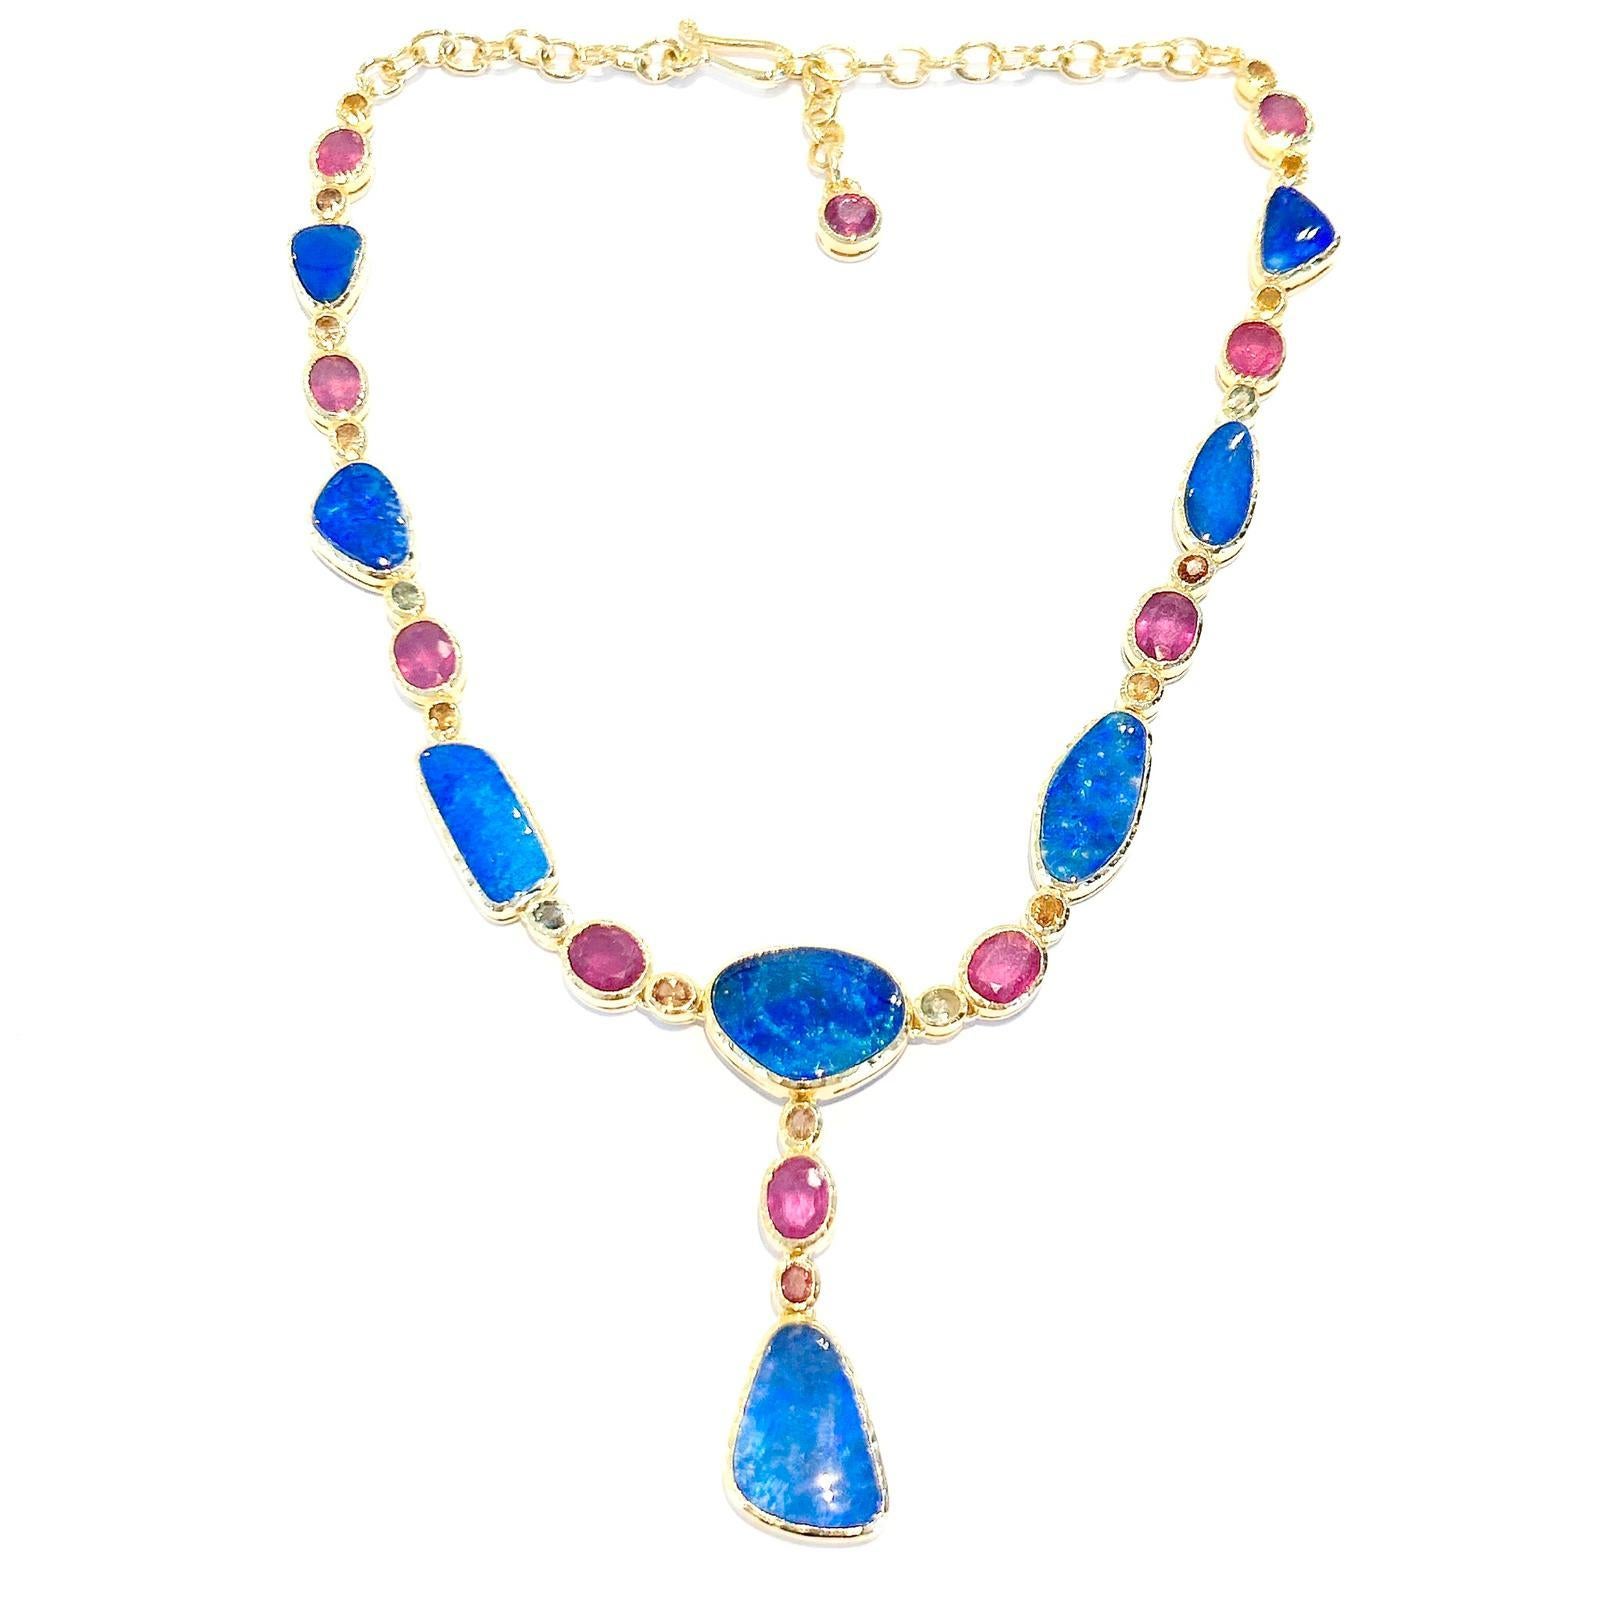 Brilliant Cut Bochic “Capri” Blue Opal, Ruby & Sapphire Necklace Set in 22k Gold & Silver For Sale